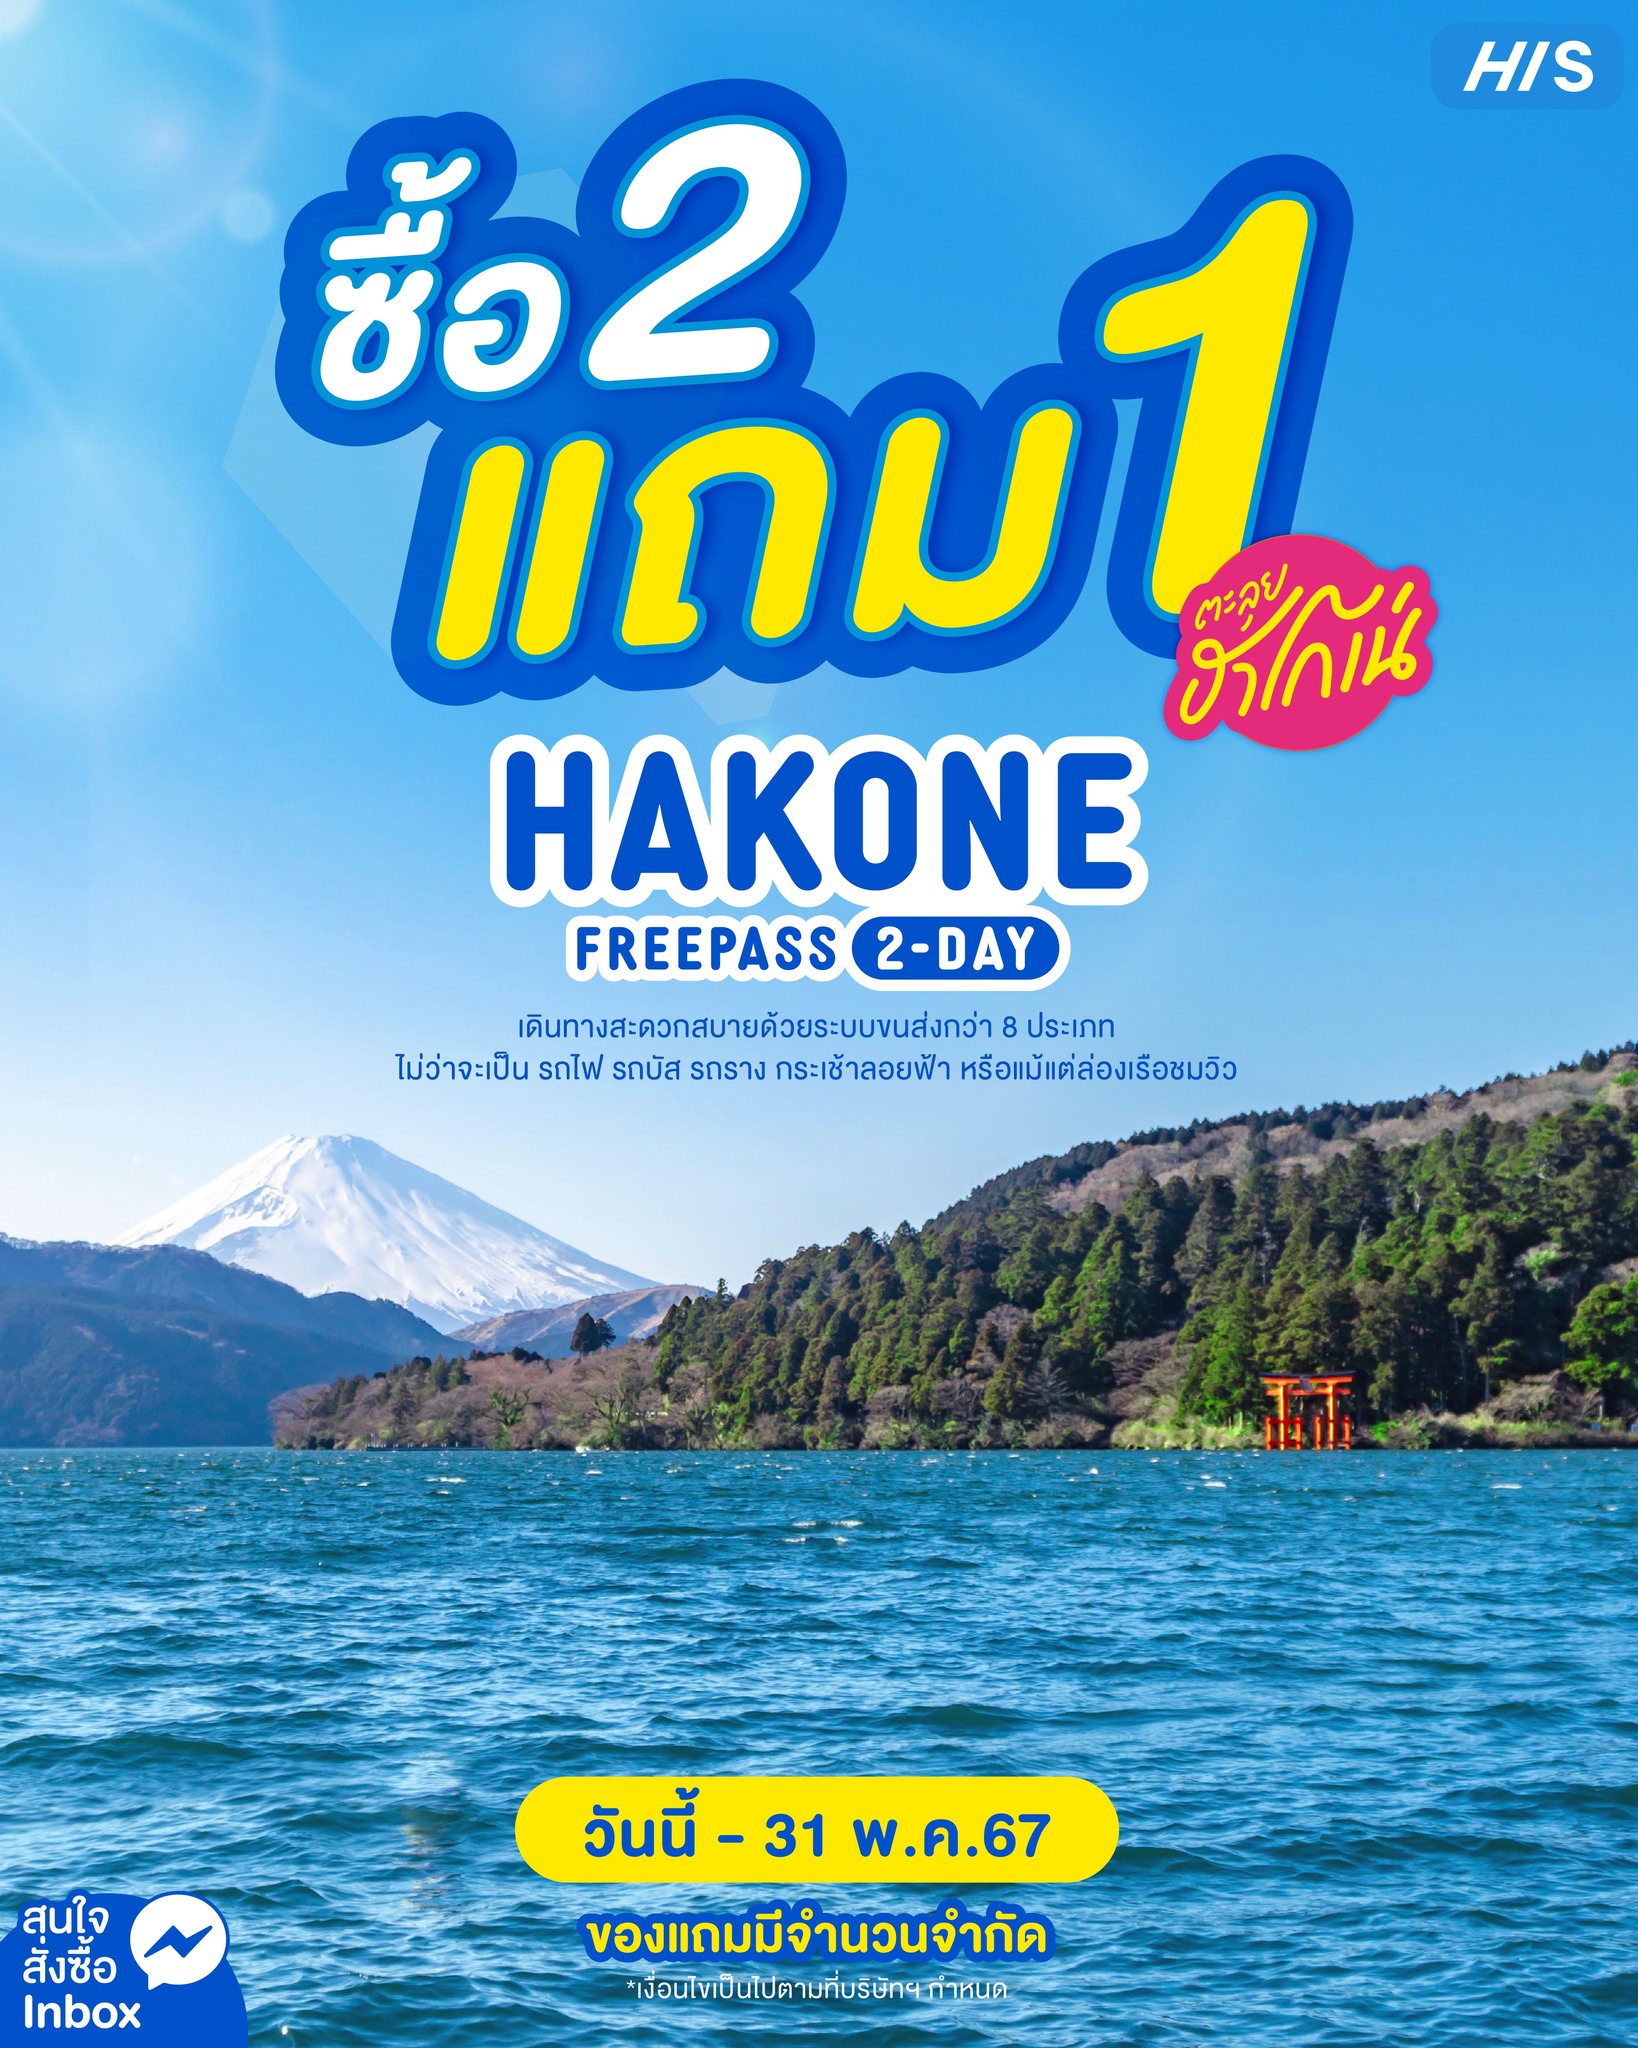 Buy2Get1Free Hakone Freepass 2-Day